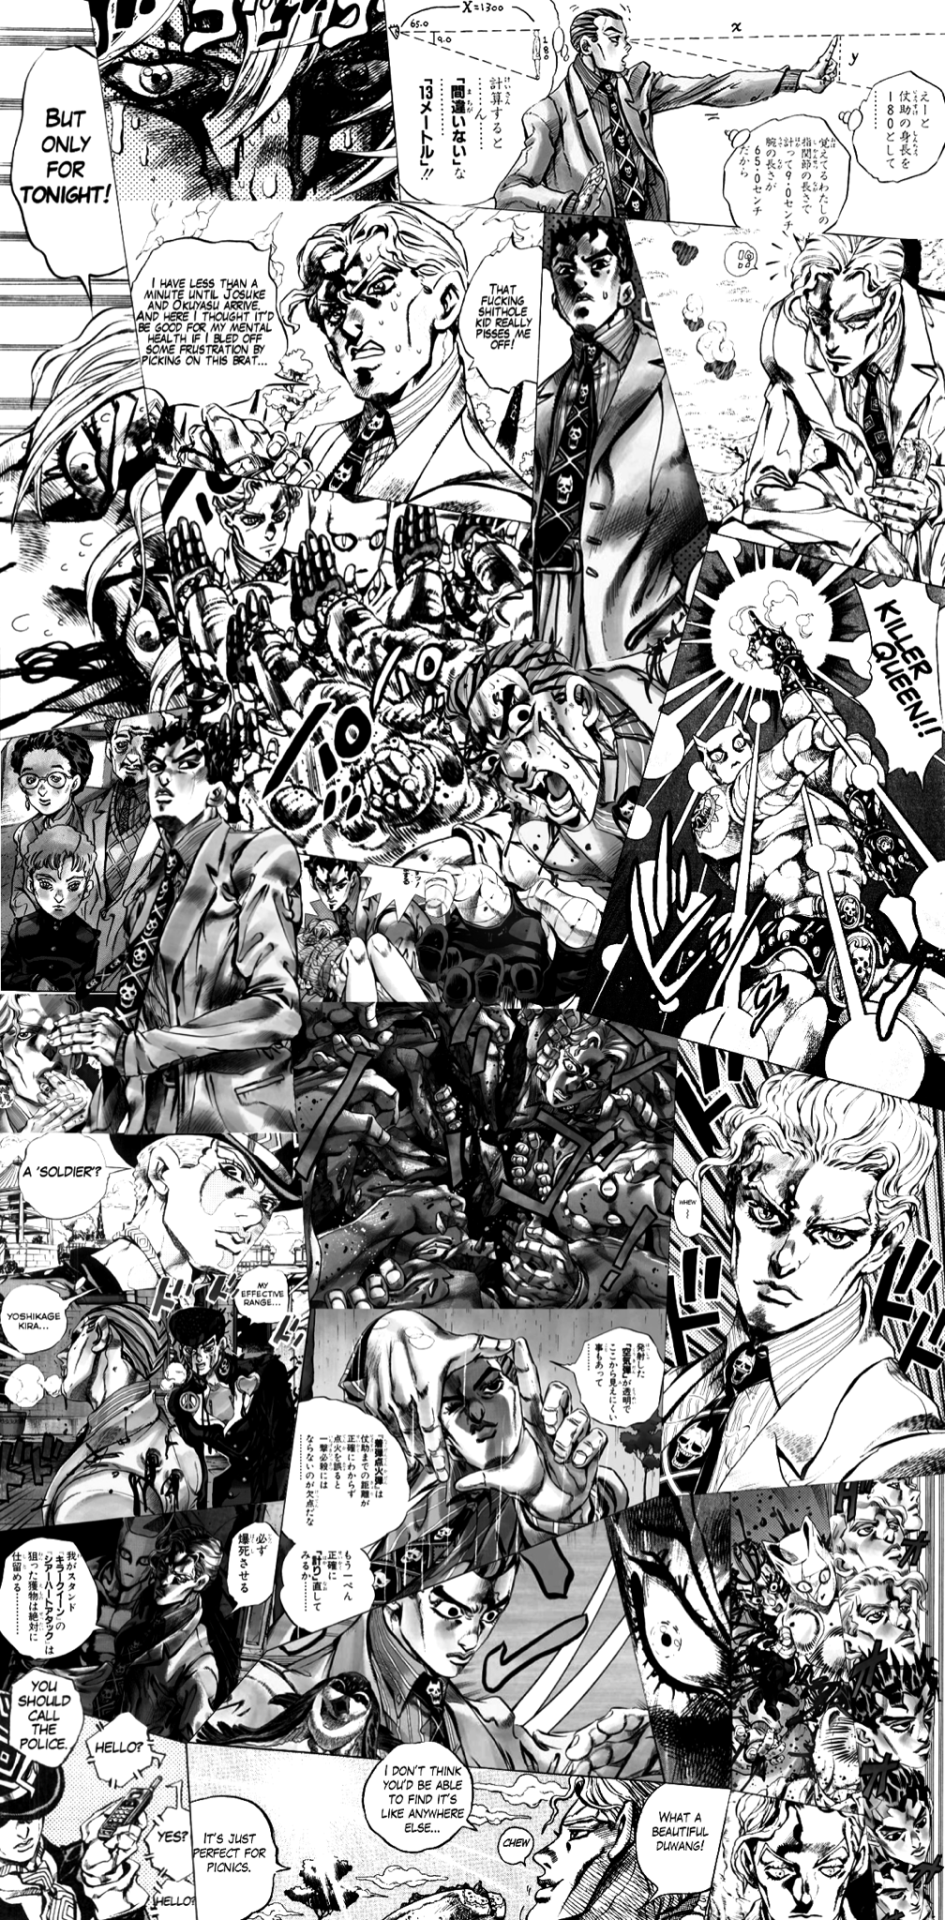 Wallpaper Hoe., Full sized manga walls from my last Kira post